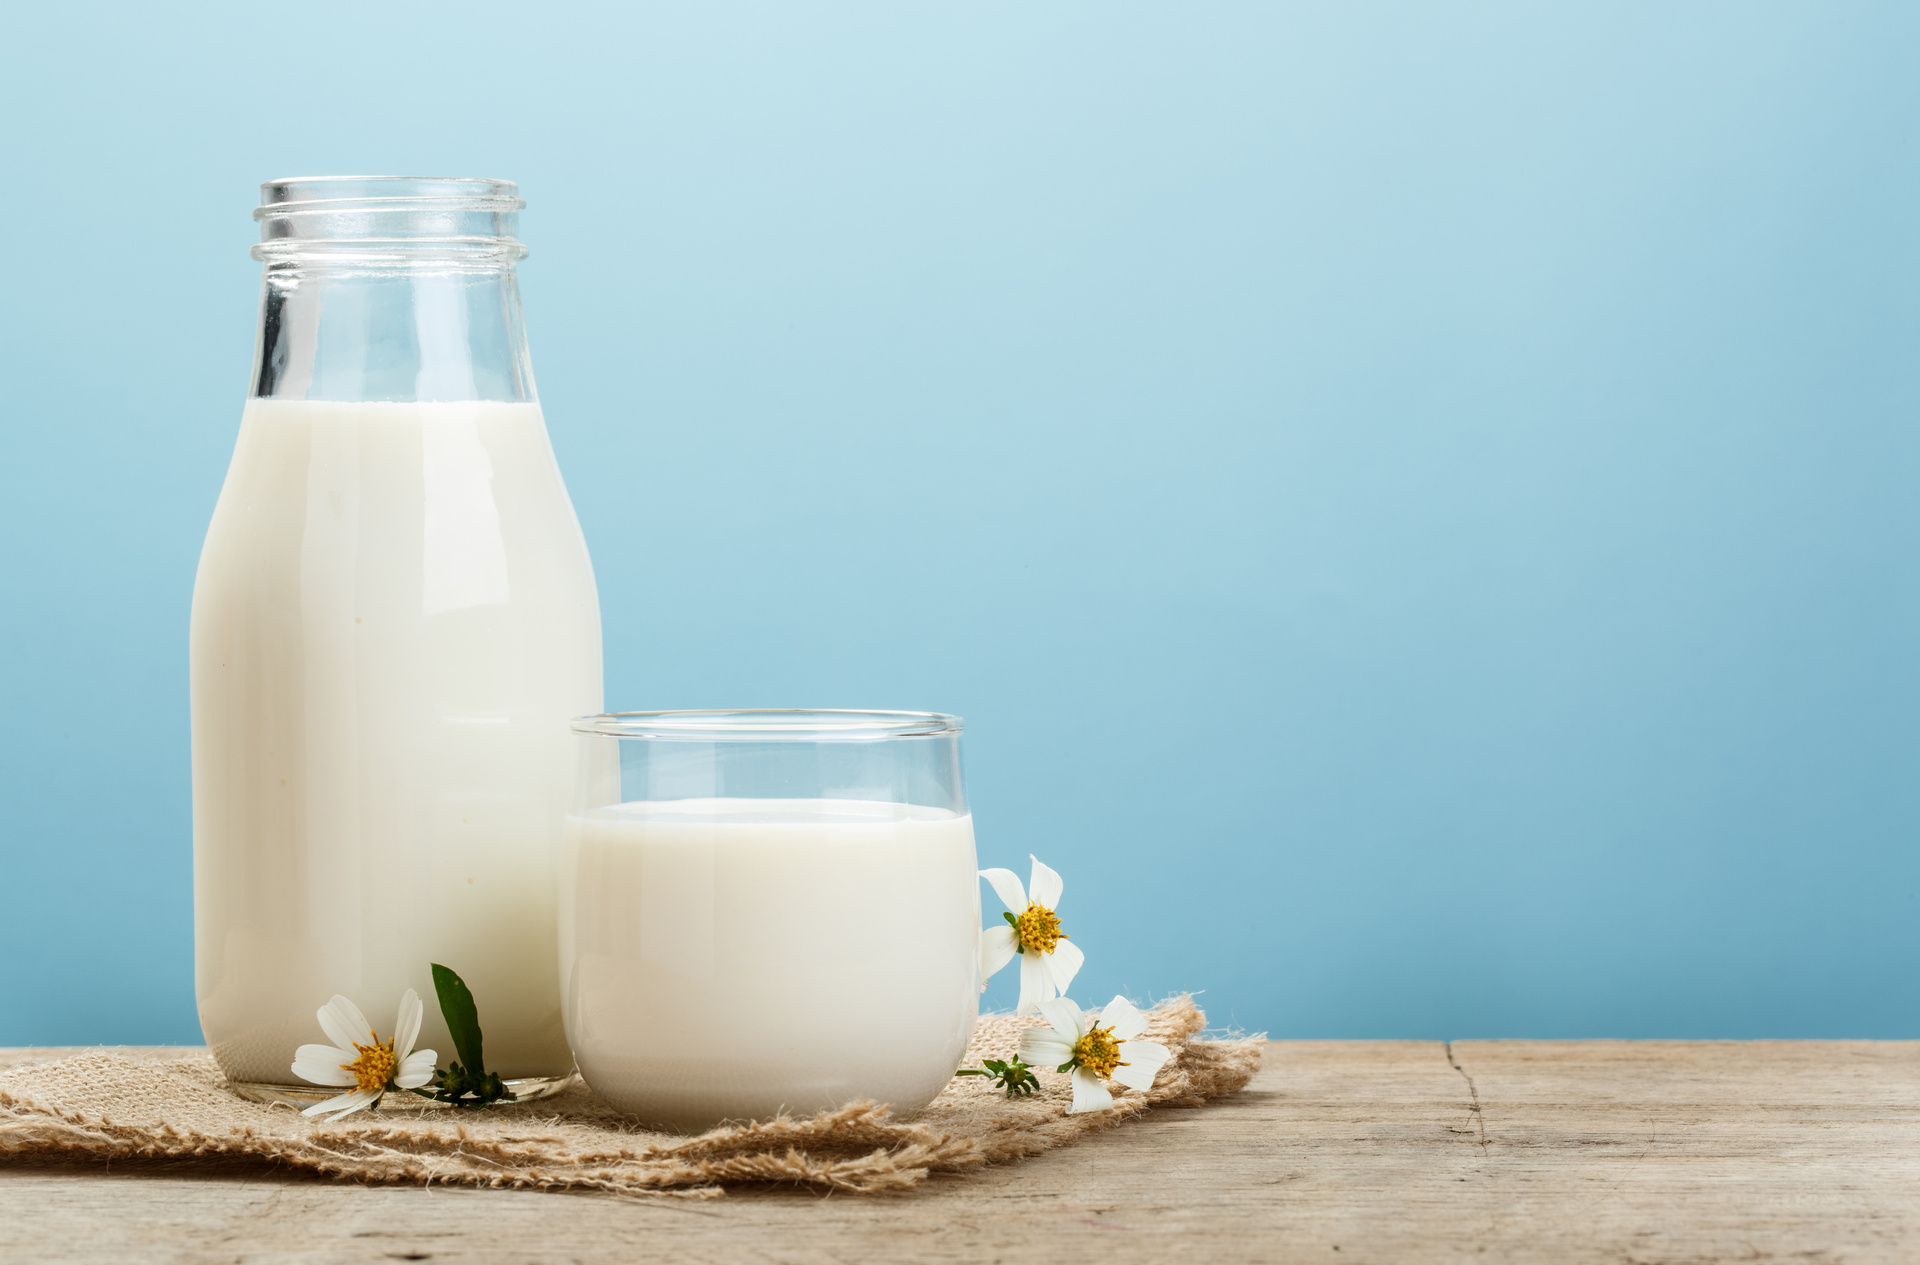 ¿Qué sucede si consumes mucha leche a diario, según Harvard?